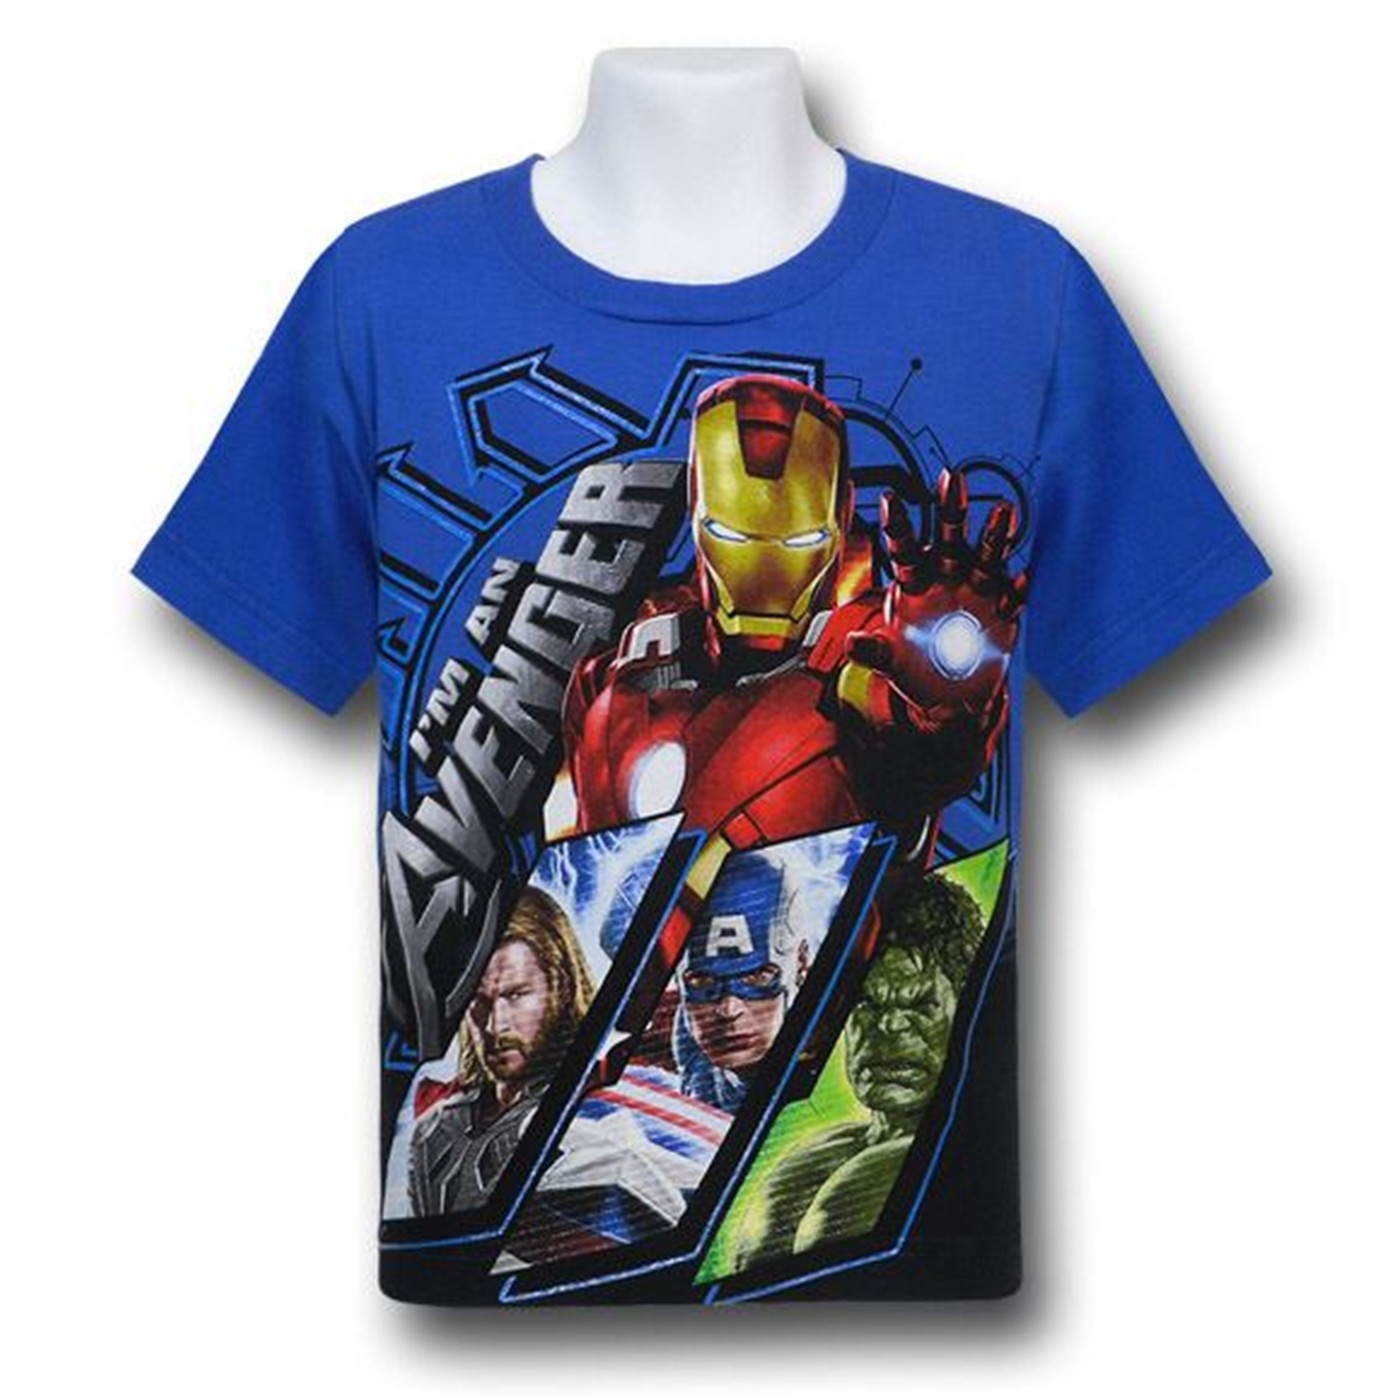  Avengers Movie I'm An Avenger Juvenile T-Shirt